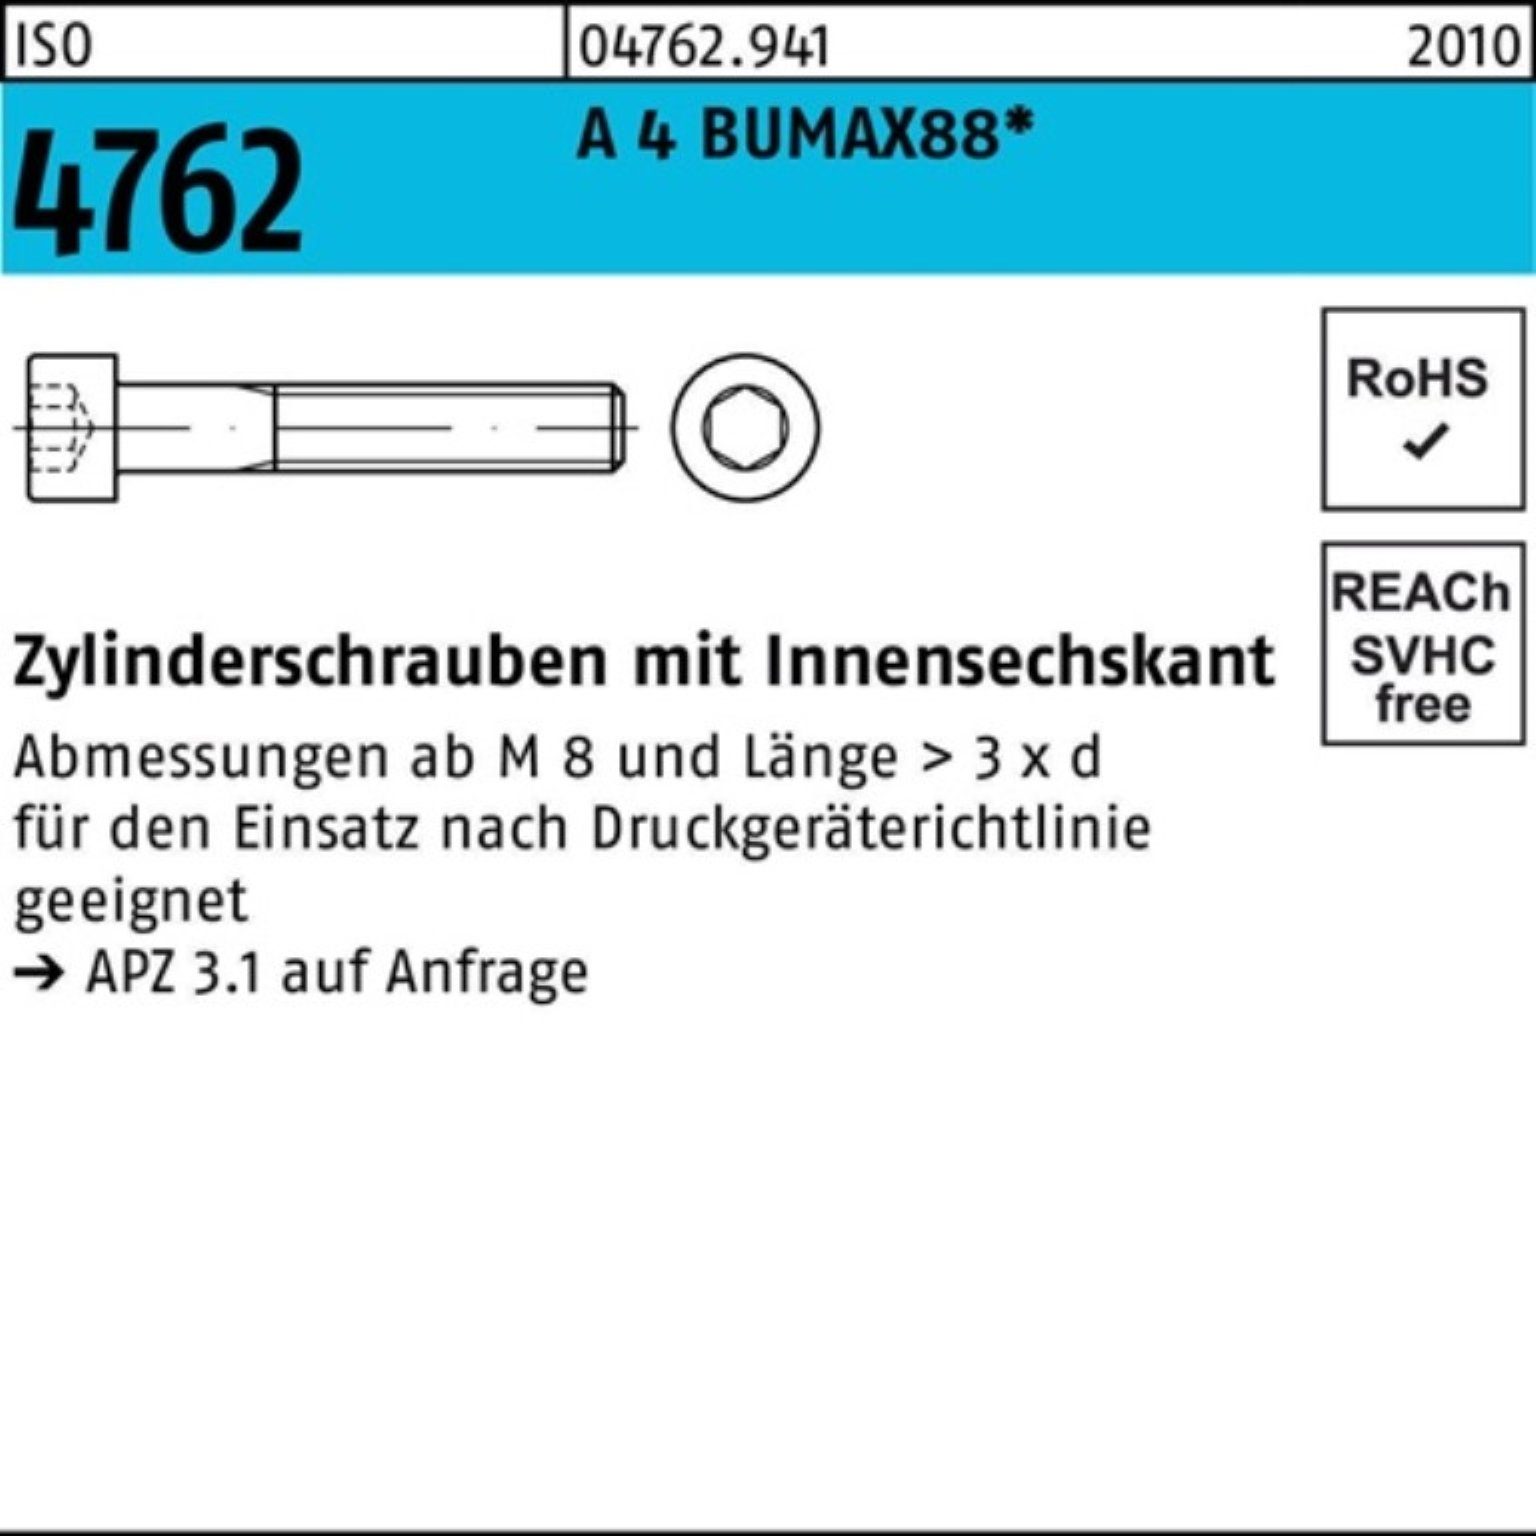 BUMAX88 60 4 10 ISO Zylinderschraube Zylinderschraube Pack A Innen-6kt 4762 100er Bufab M20x